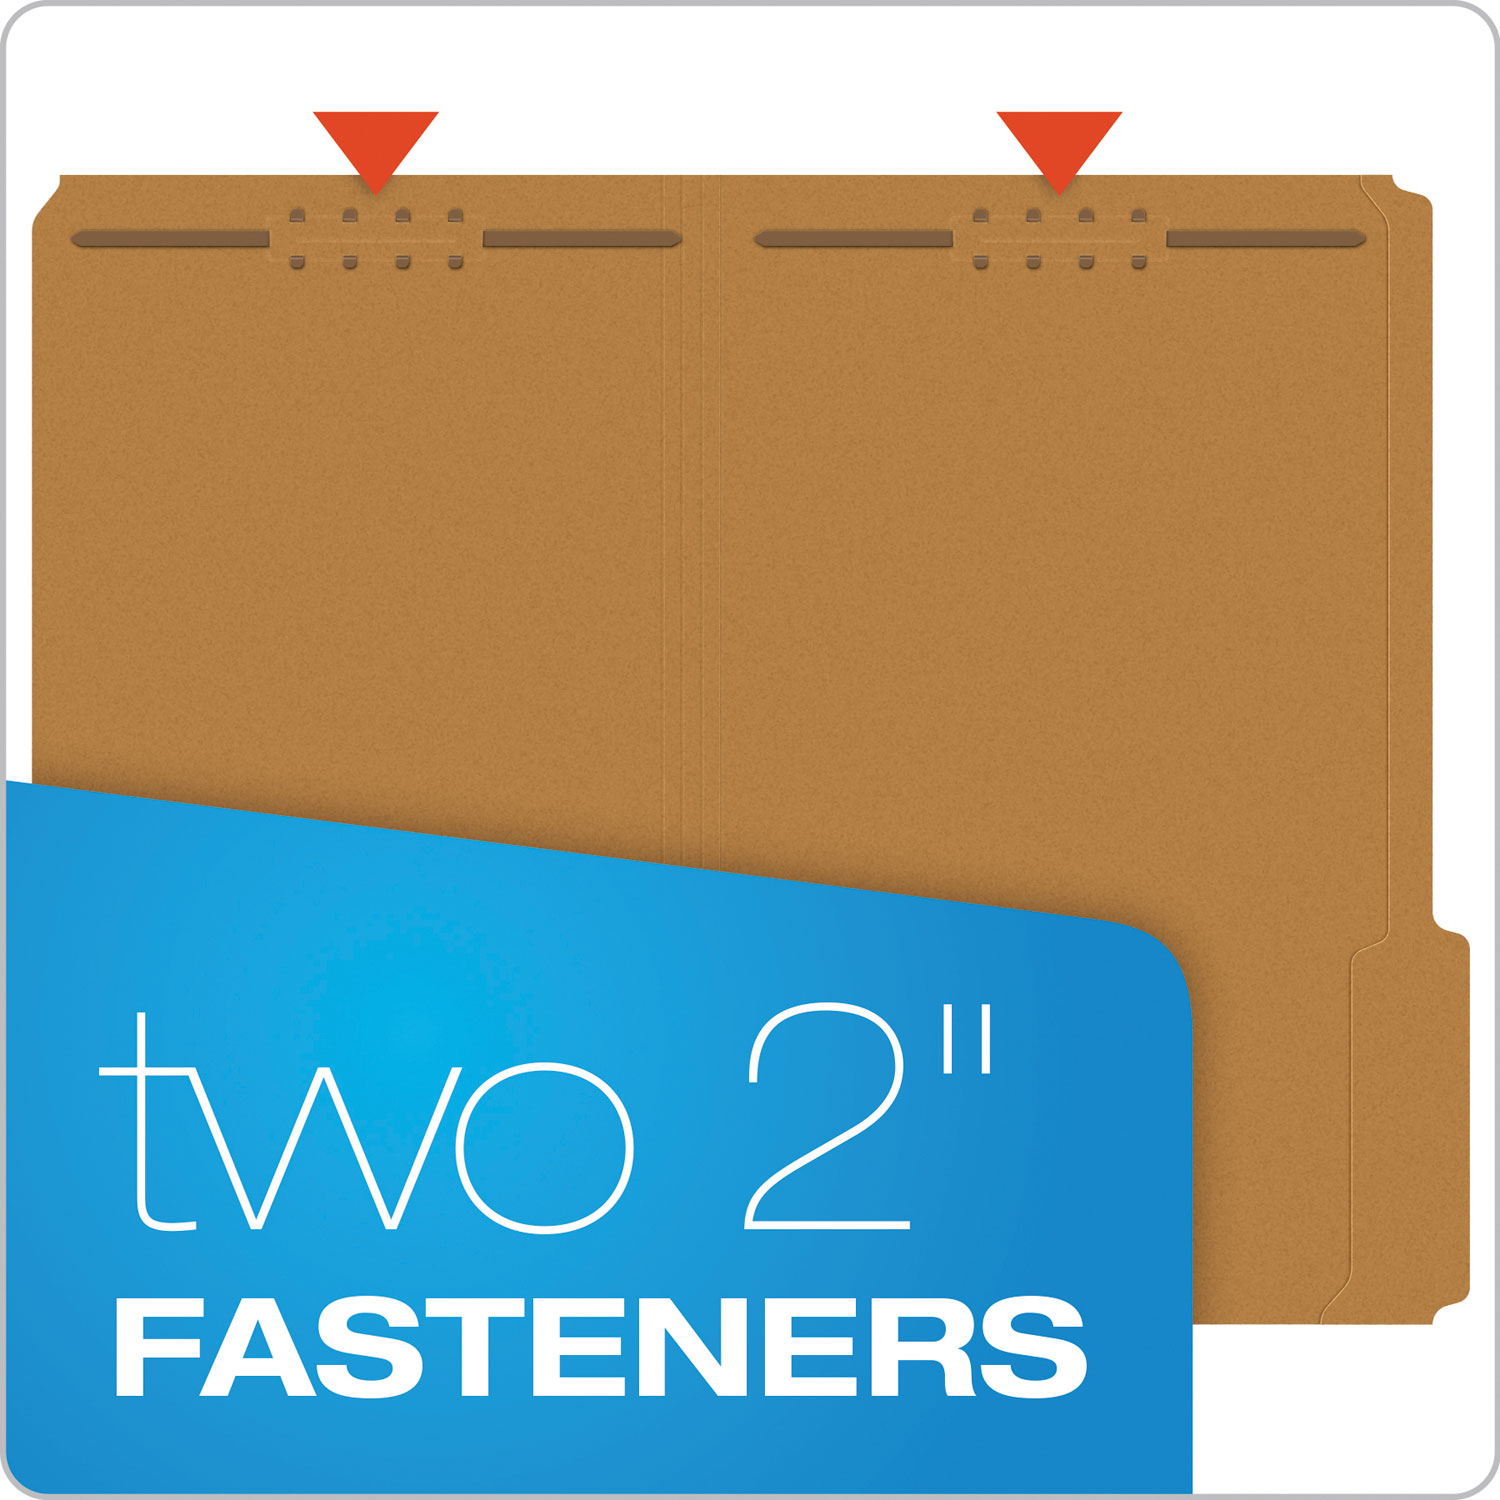 50 Per Box Manila Letter Size Center Positions in Left Right FM213 2 Fasteners 1/3 Cut Tabs Pendaflex Fastener Folders 